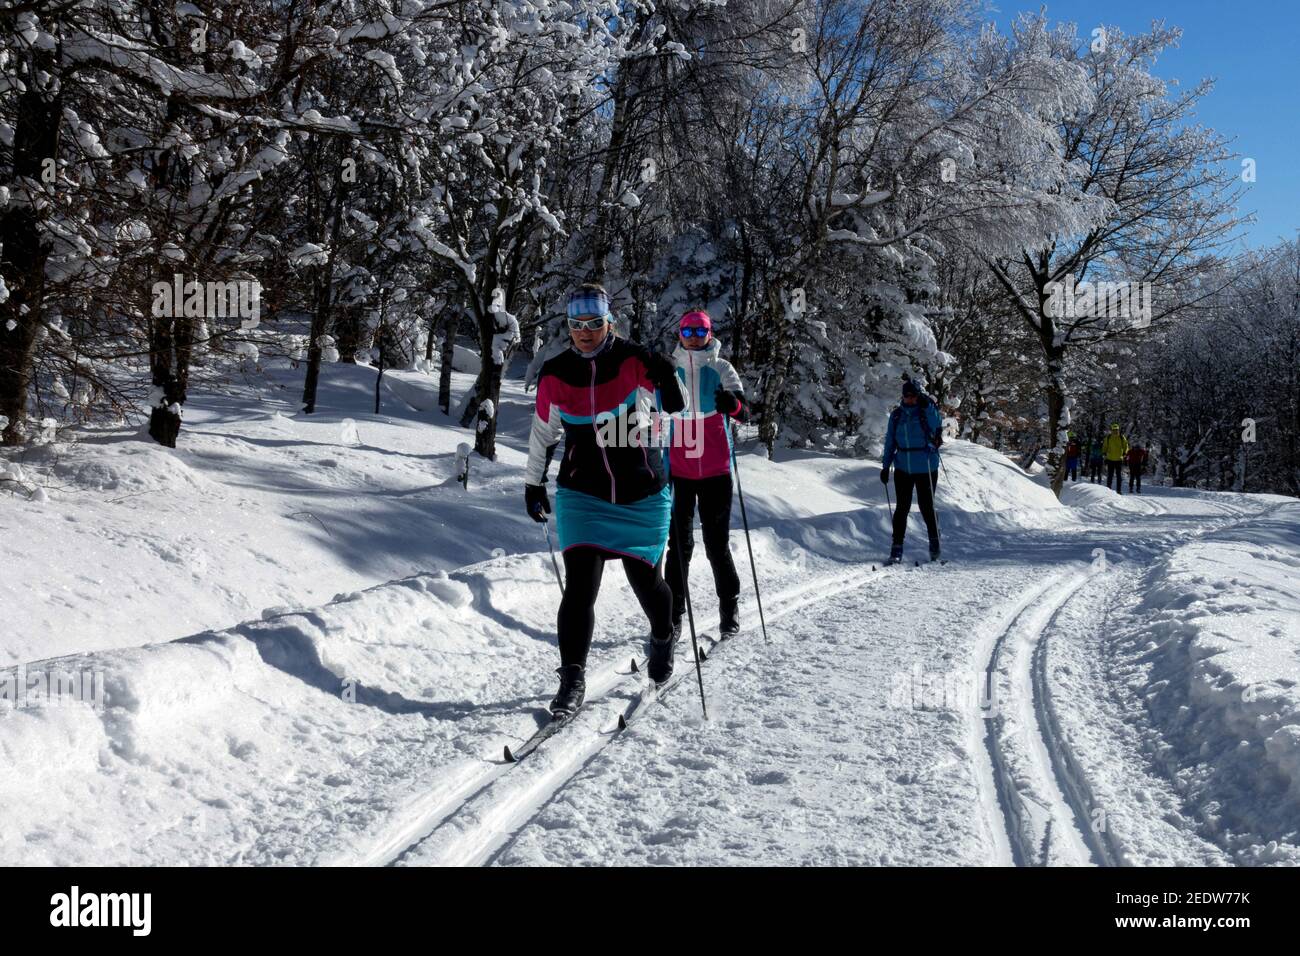 Trail in snowy forest Women skiers outdoors fitness winter scene Stock Photo